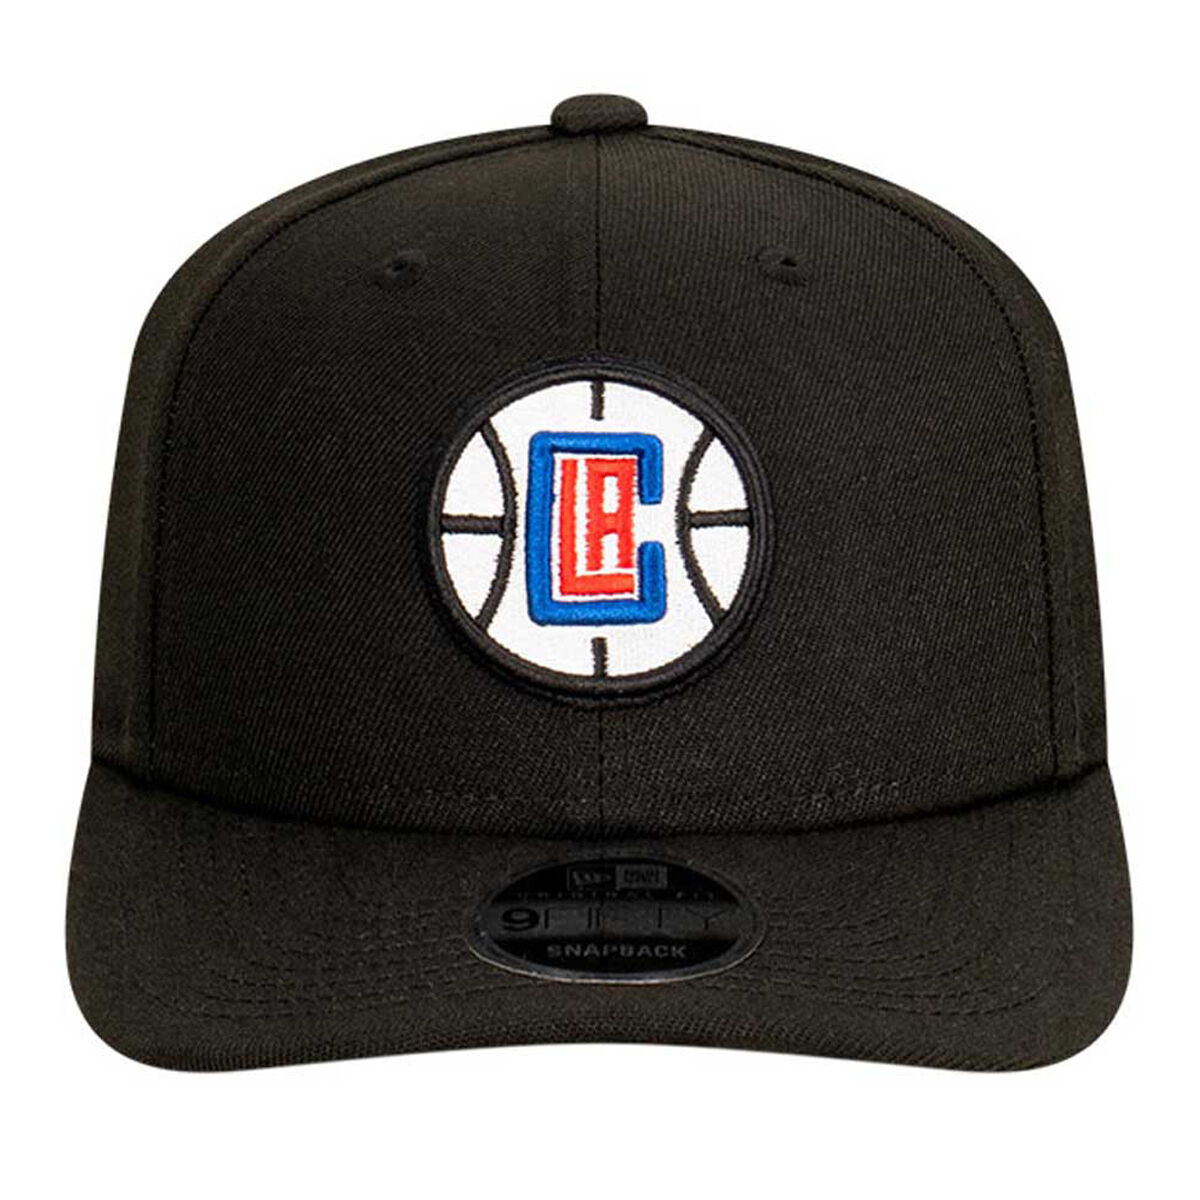 Los Angeles Clippers New Era 9FIFTY Cap | Rebel Sport